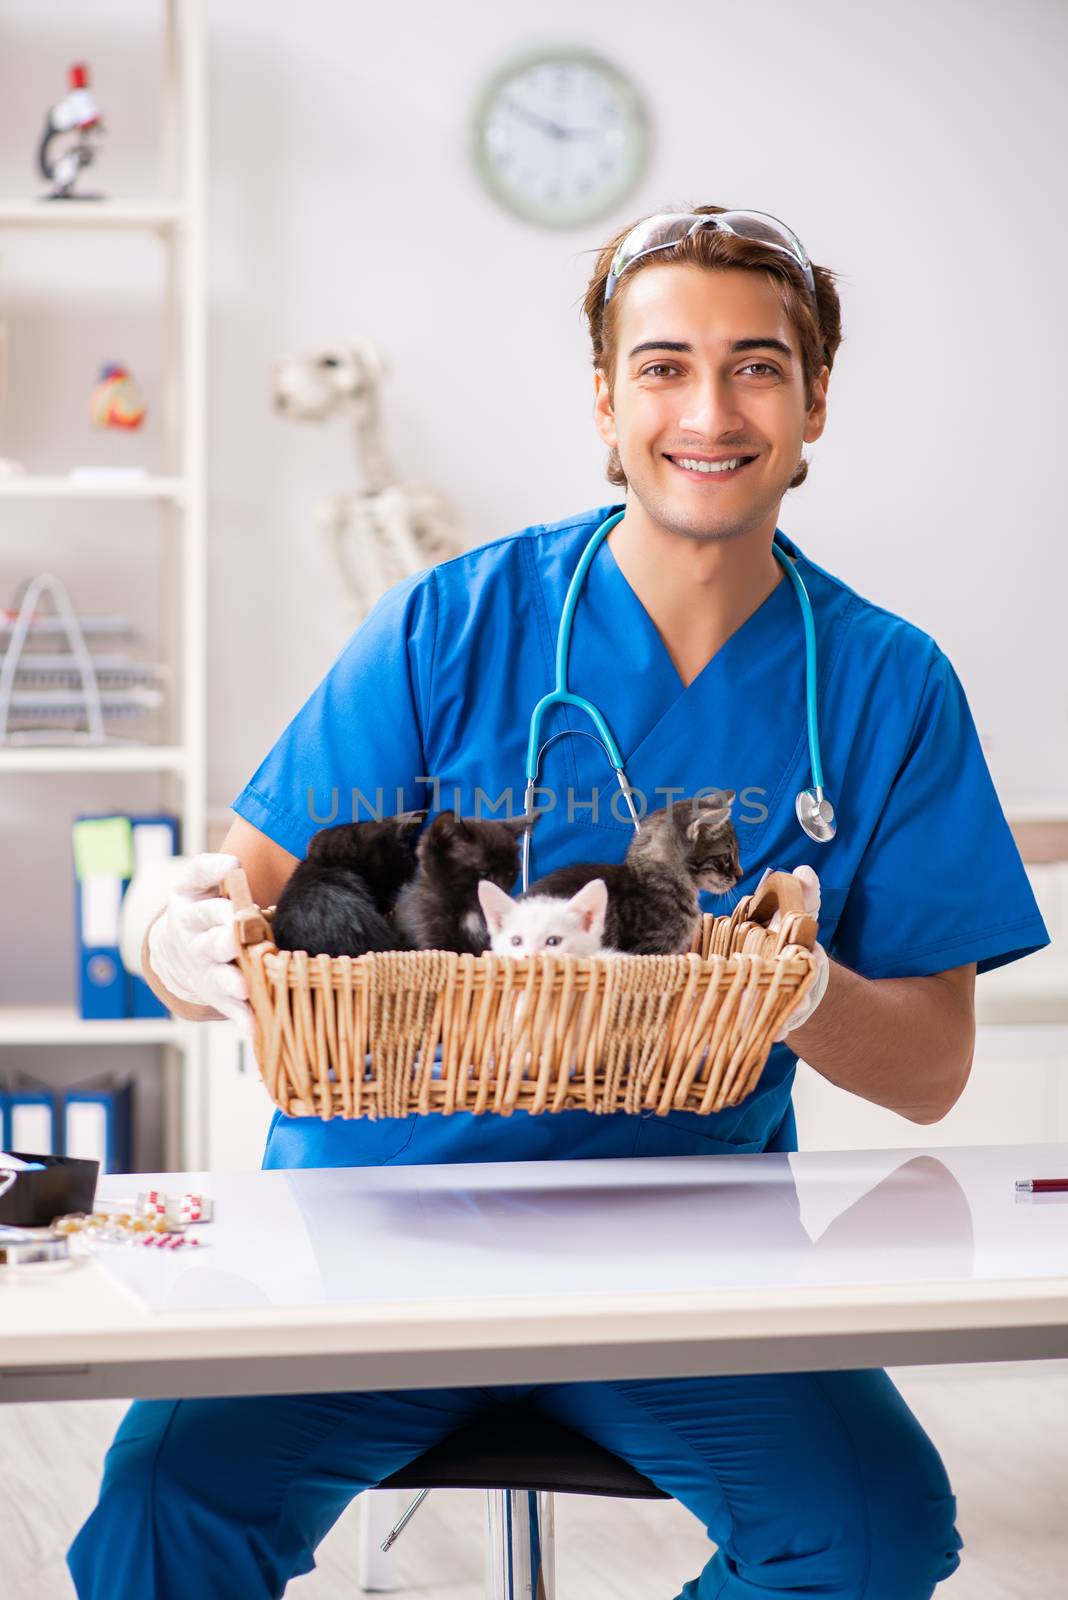 Vet doctor examining kittens in animal hospital by Elnur